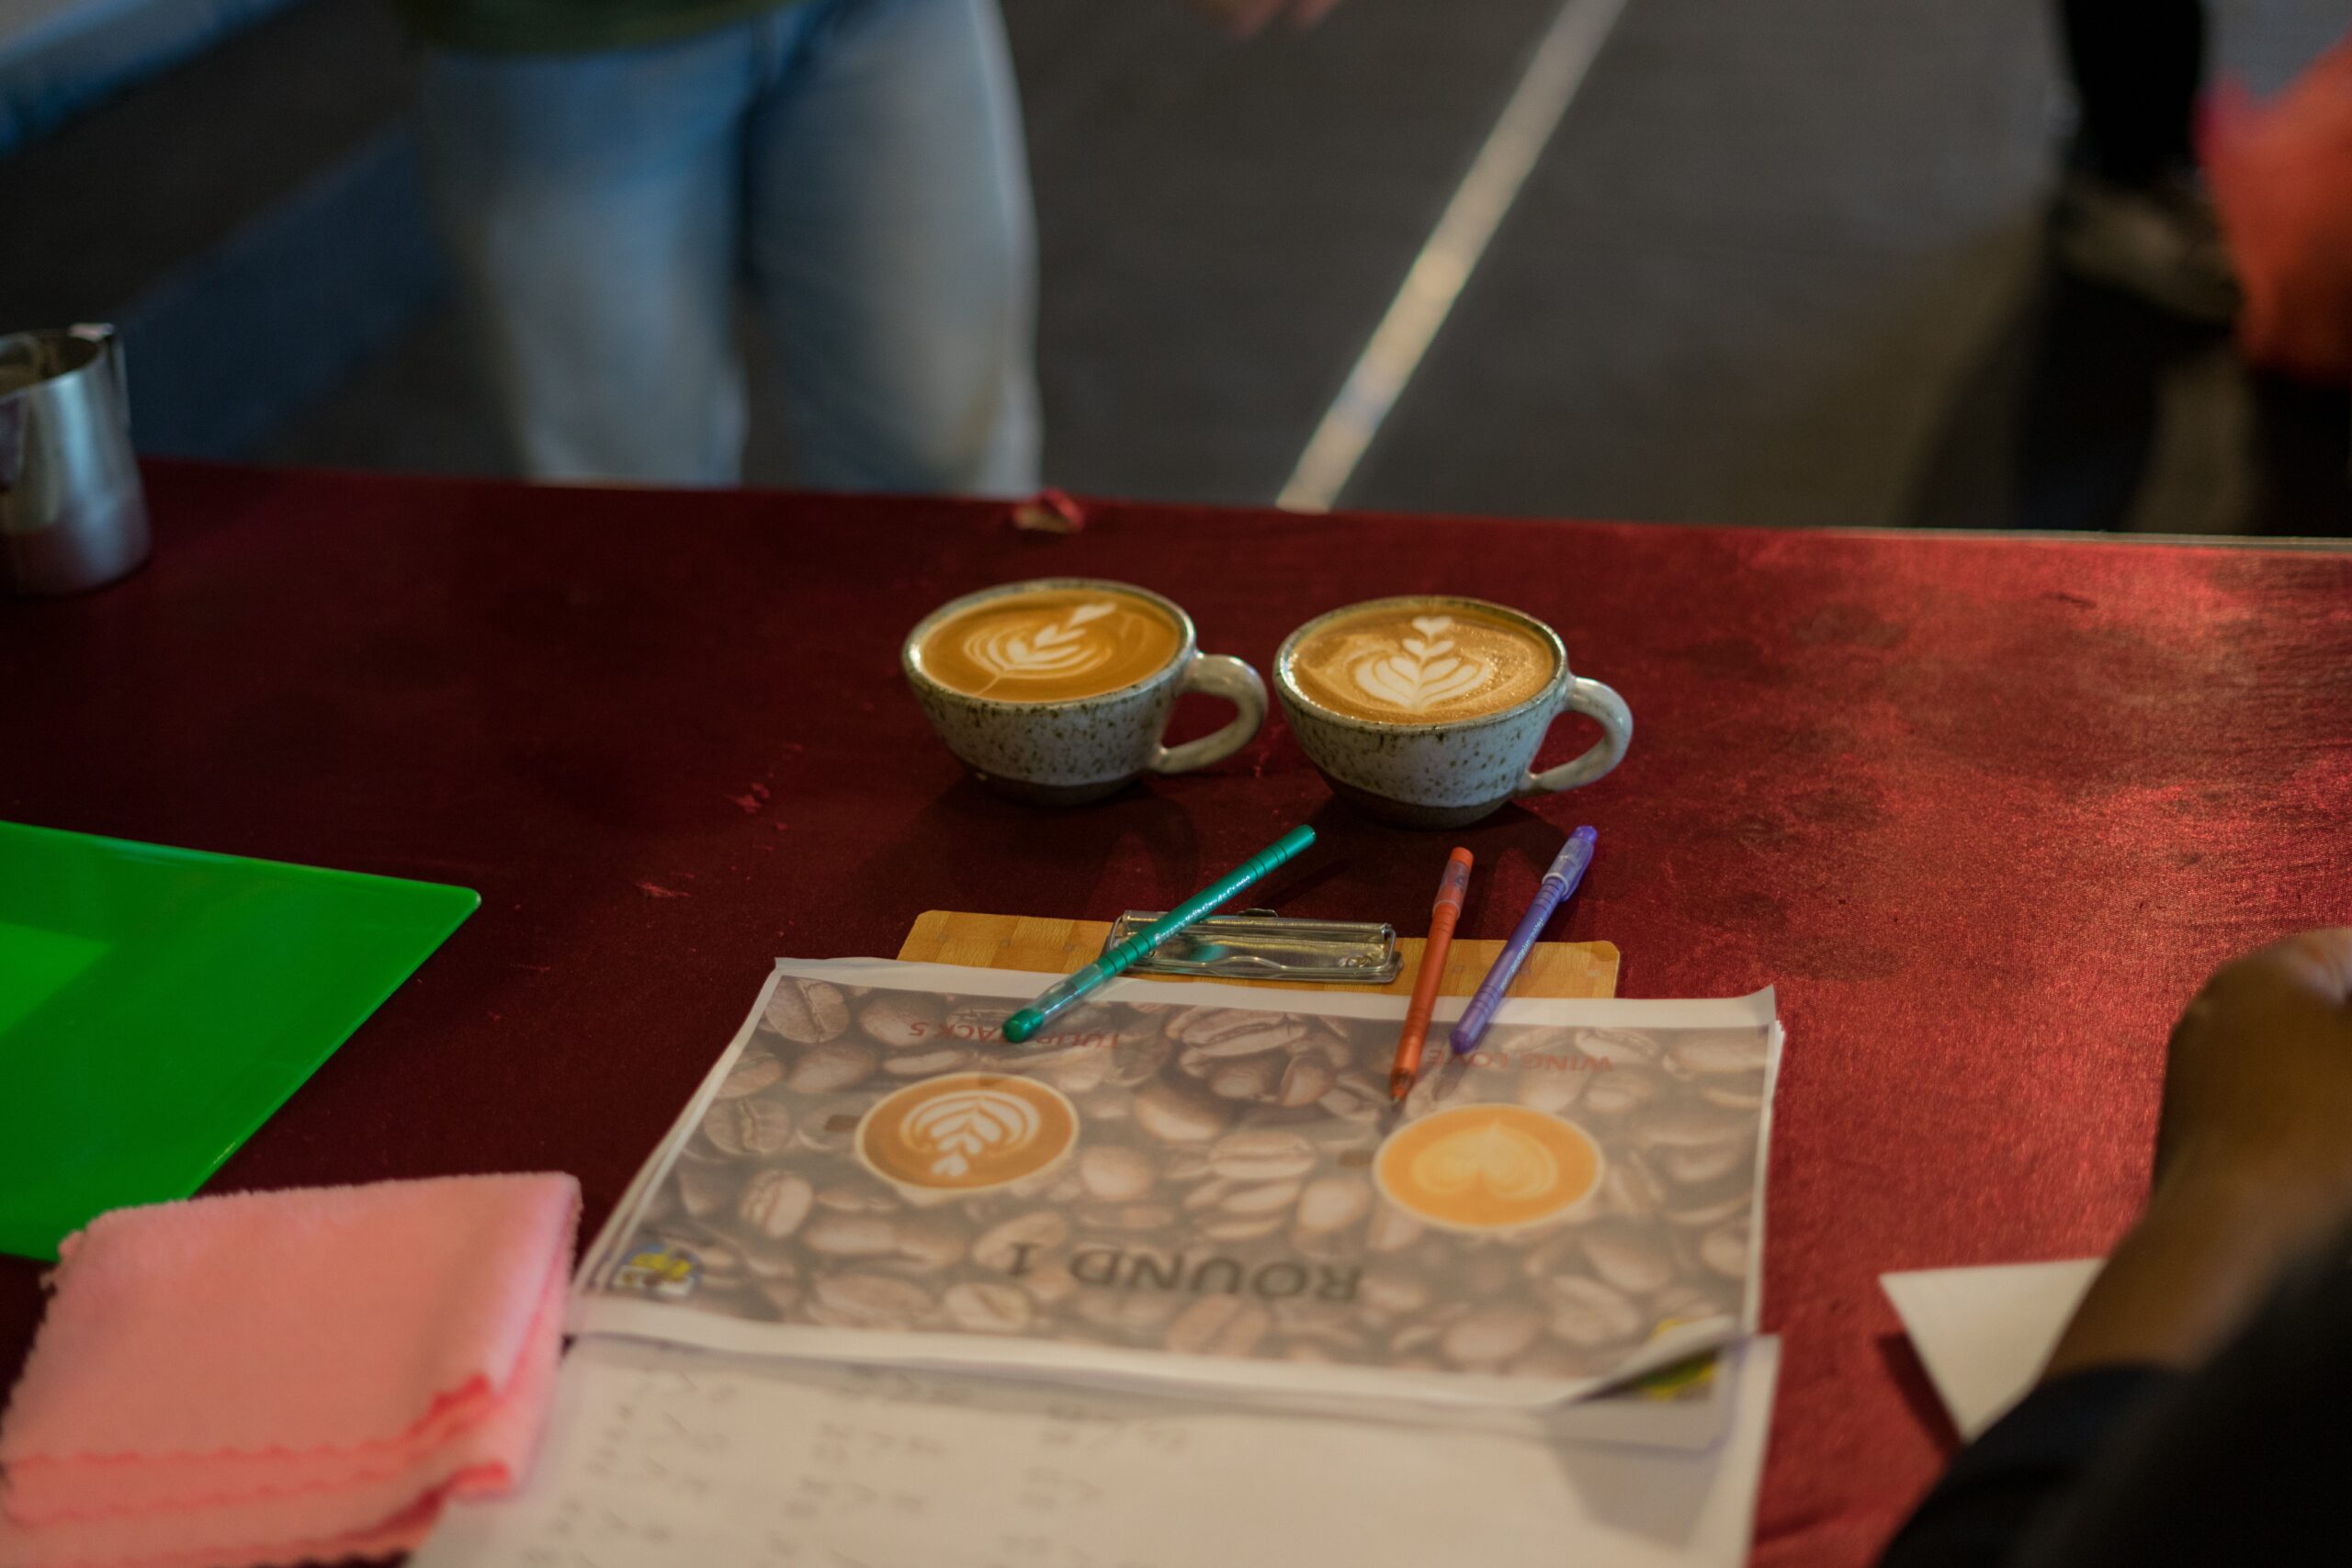 Latte Art Competition